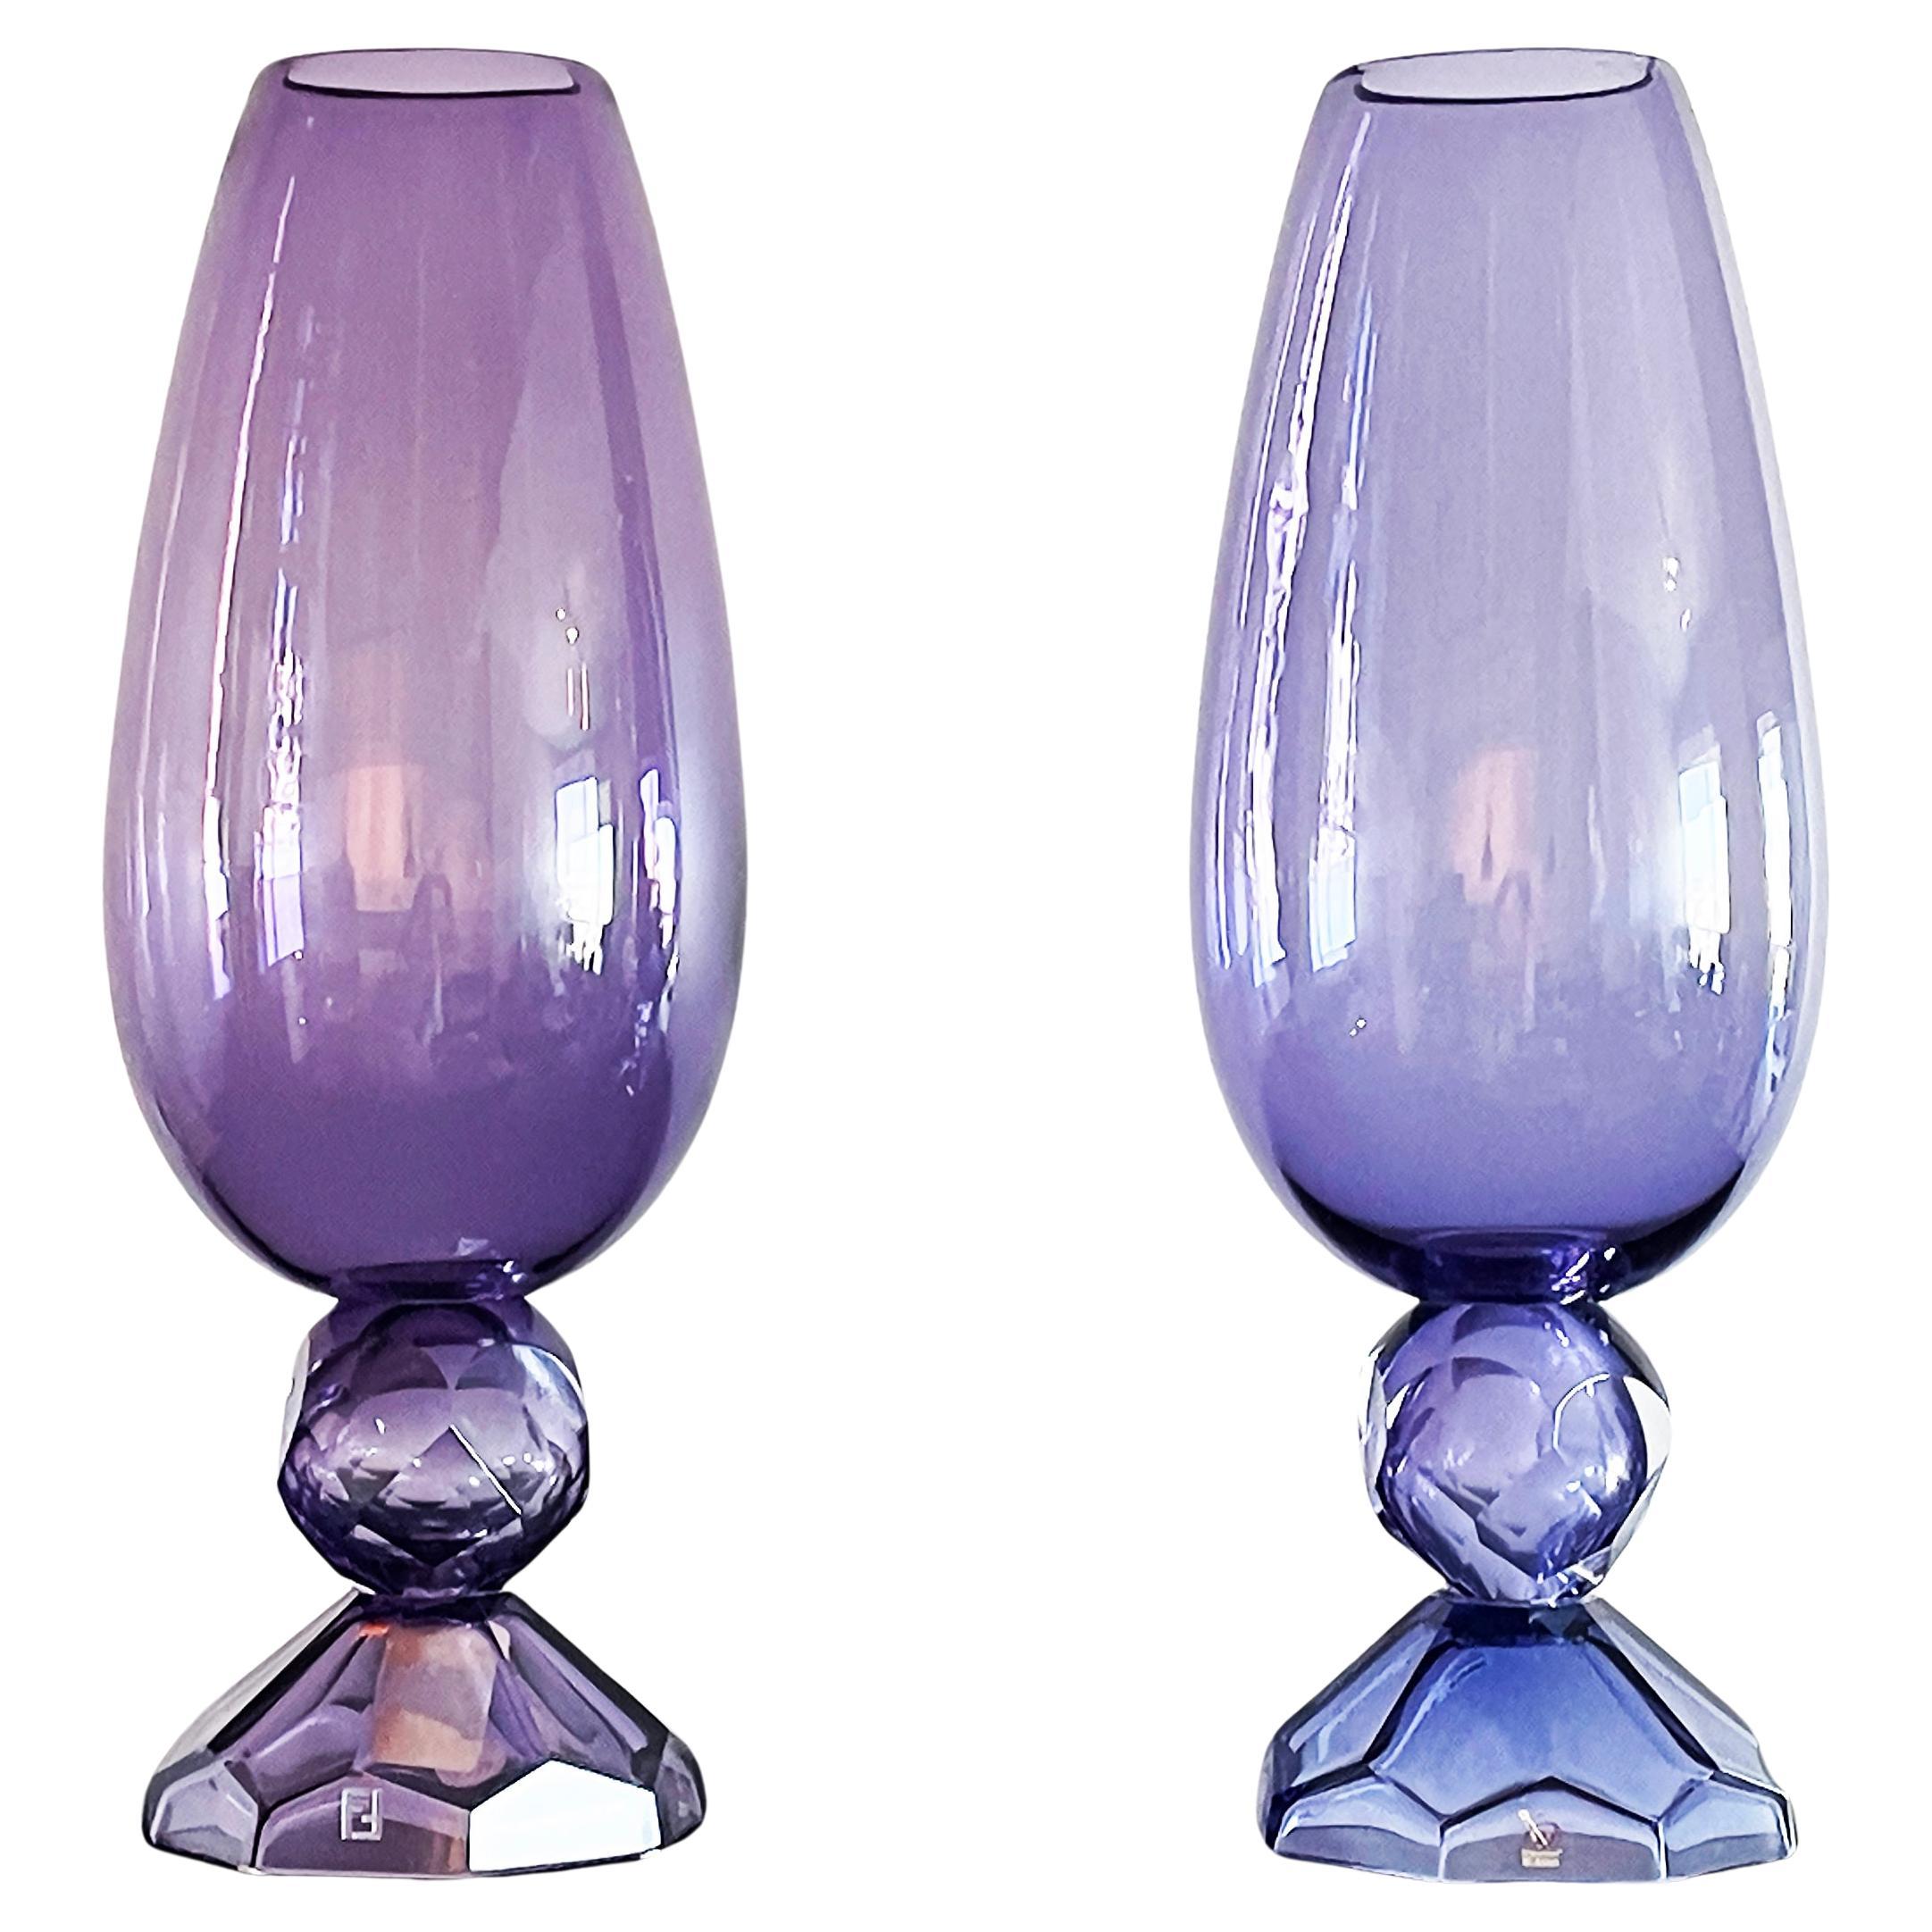 Fendi Casa Hand-blown Vetri Glass Artístico Murano Vases, Amethyst Faceted Cut  For Sale